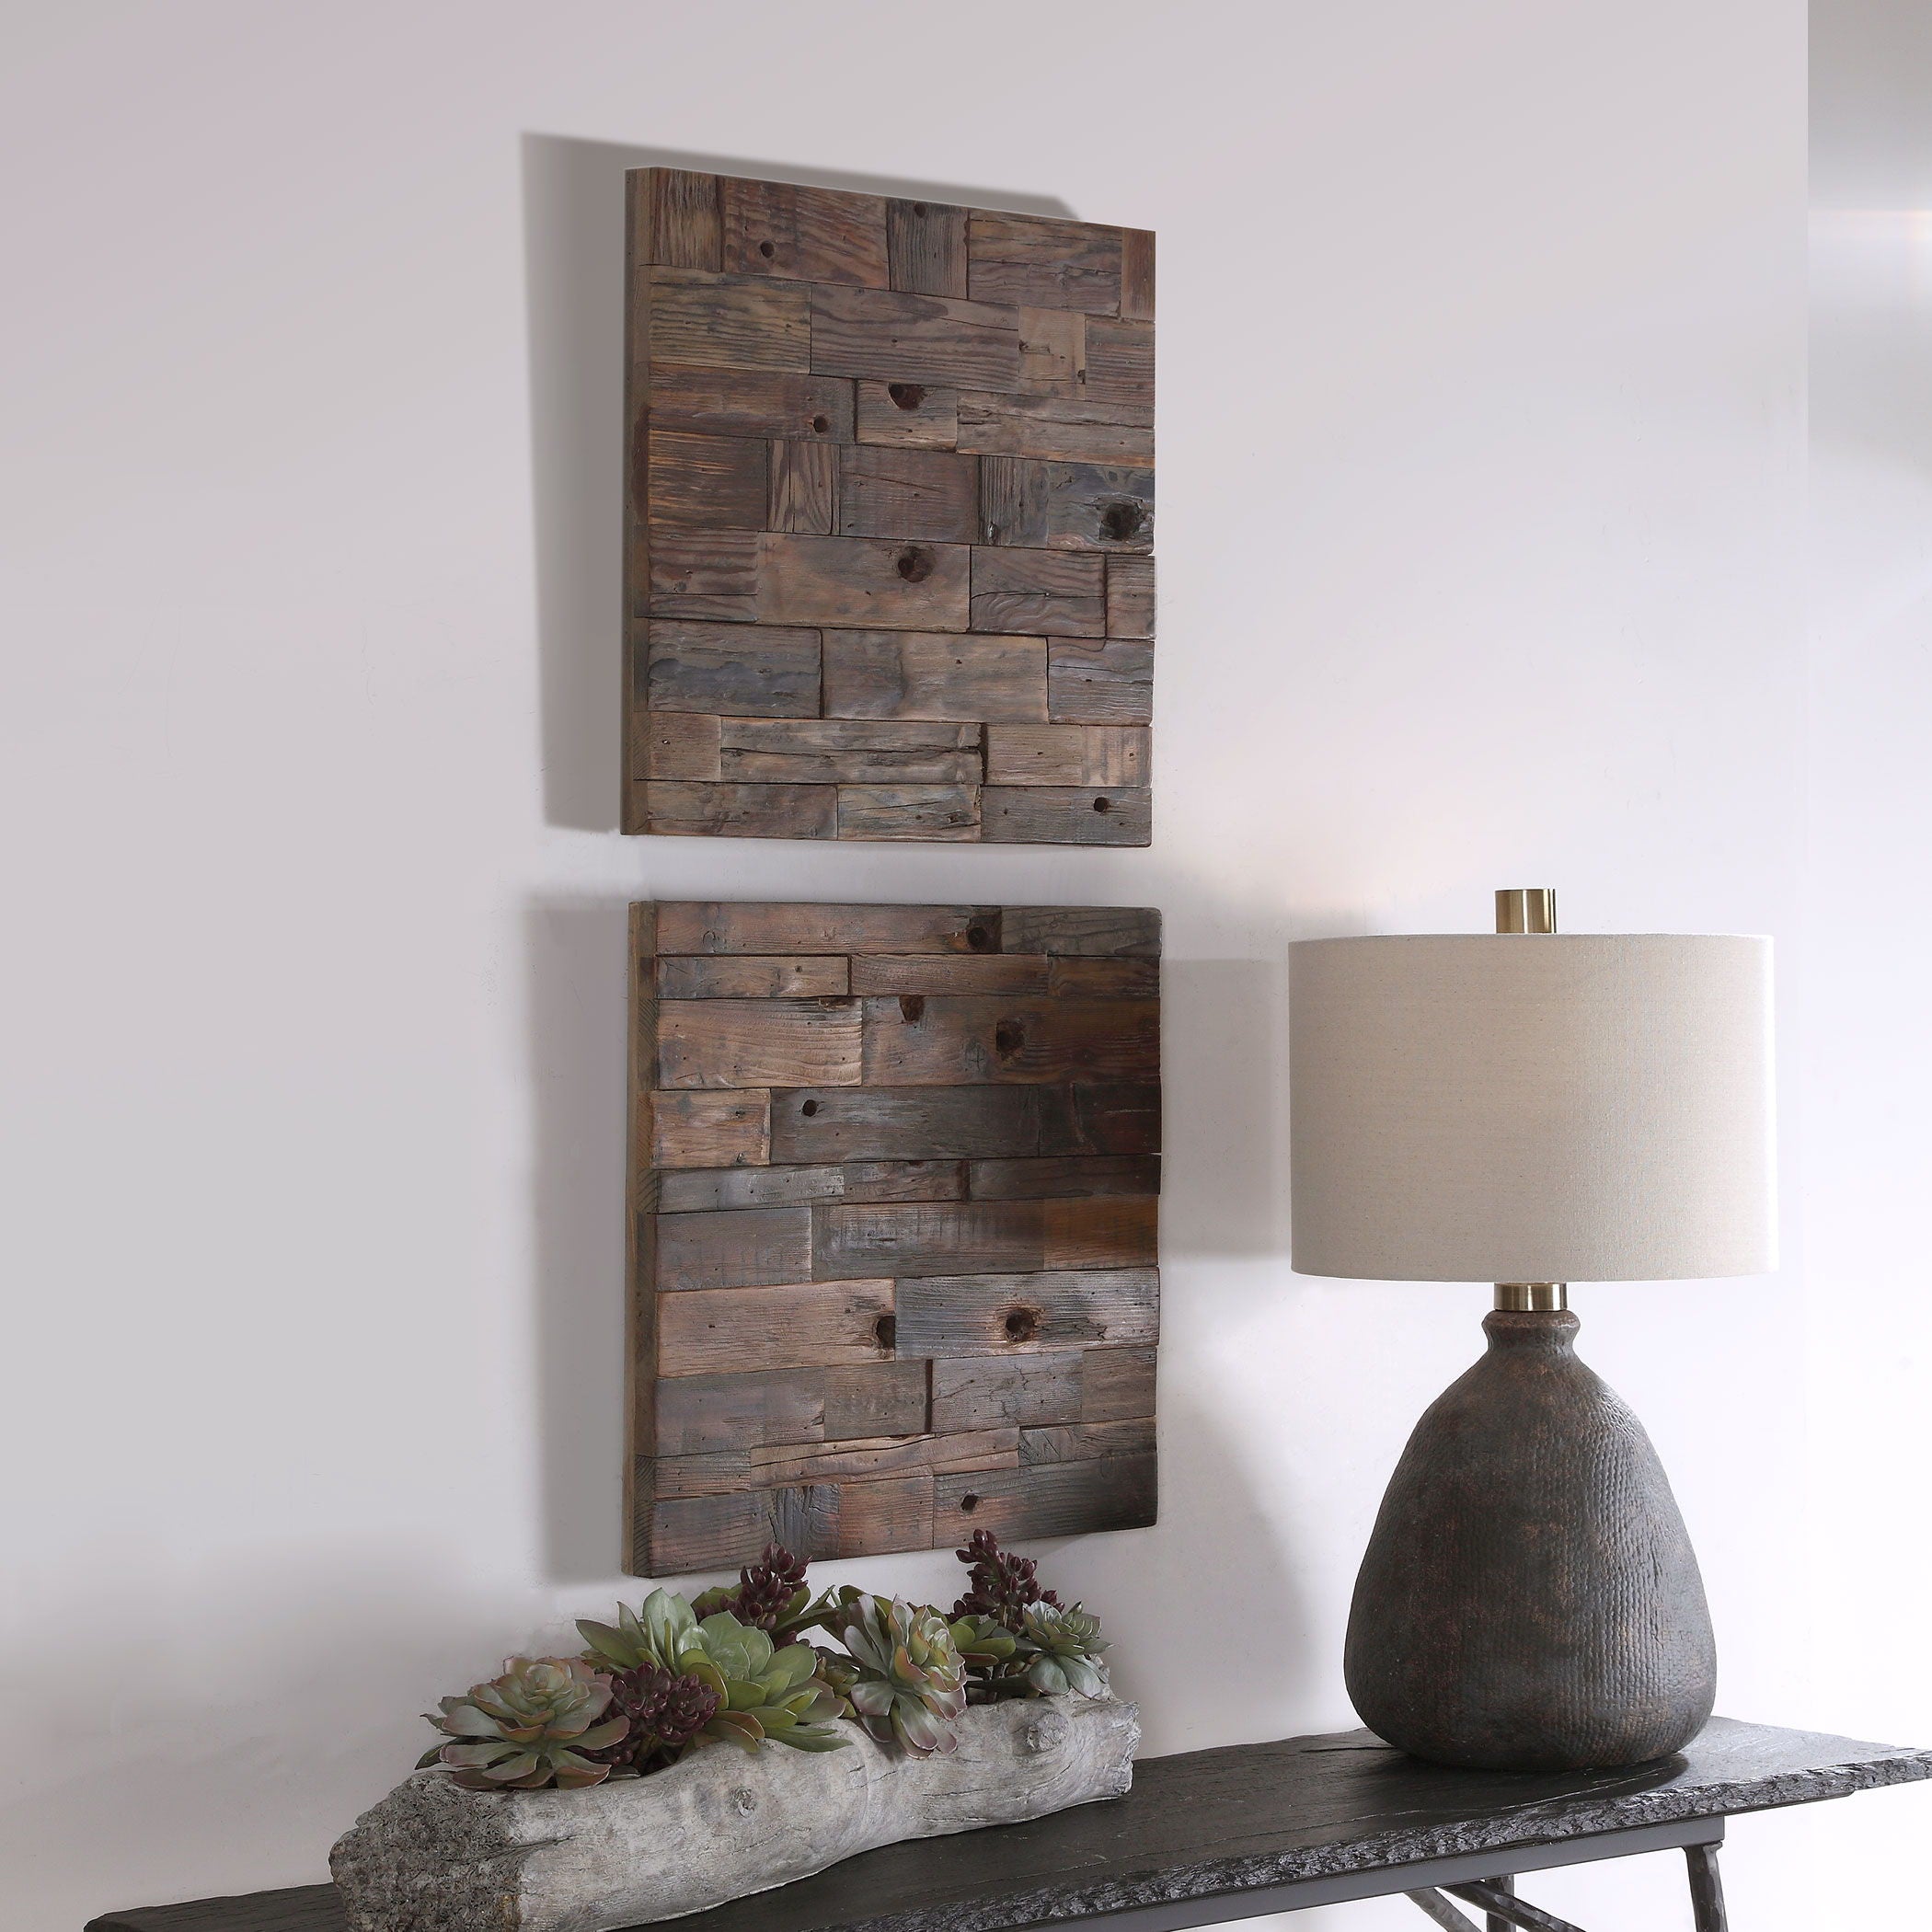 Astern - Wood Wall Decor (Set of 2) - Dark Brown